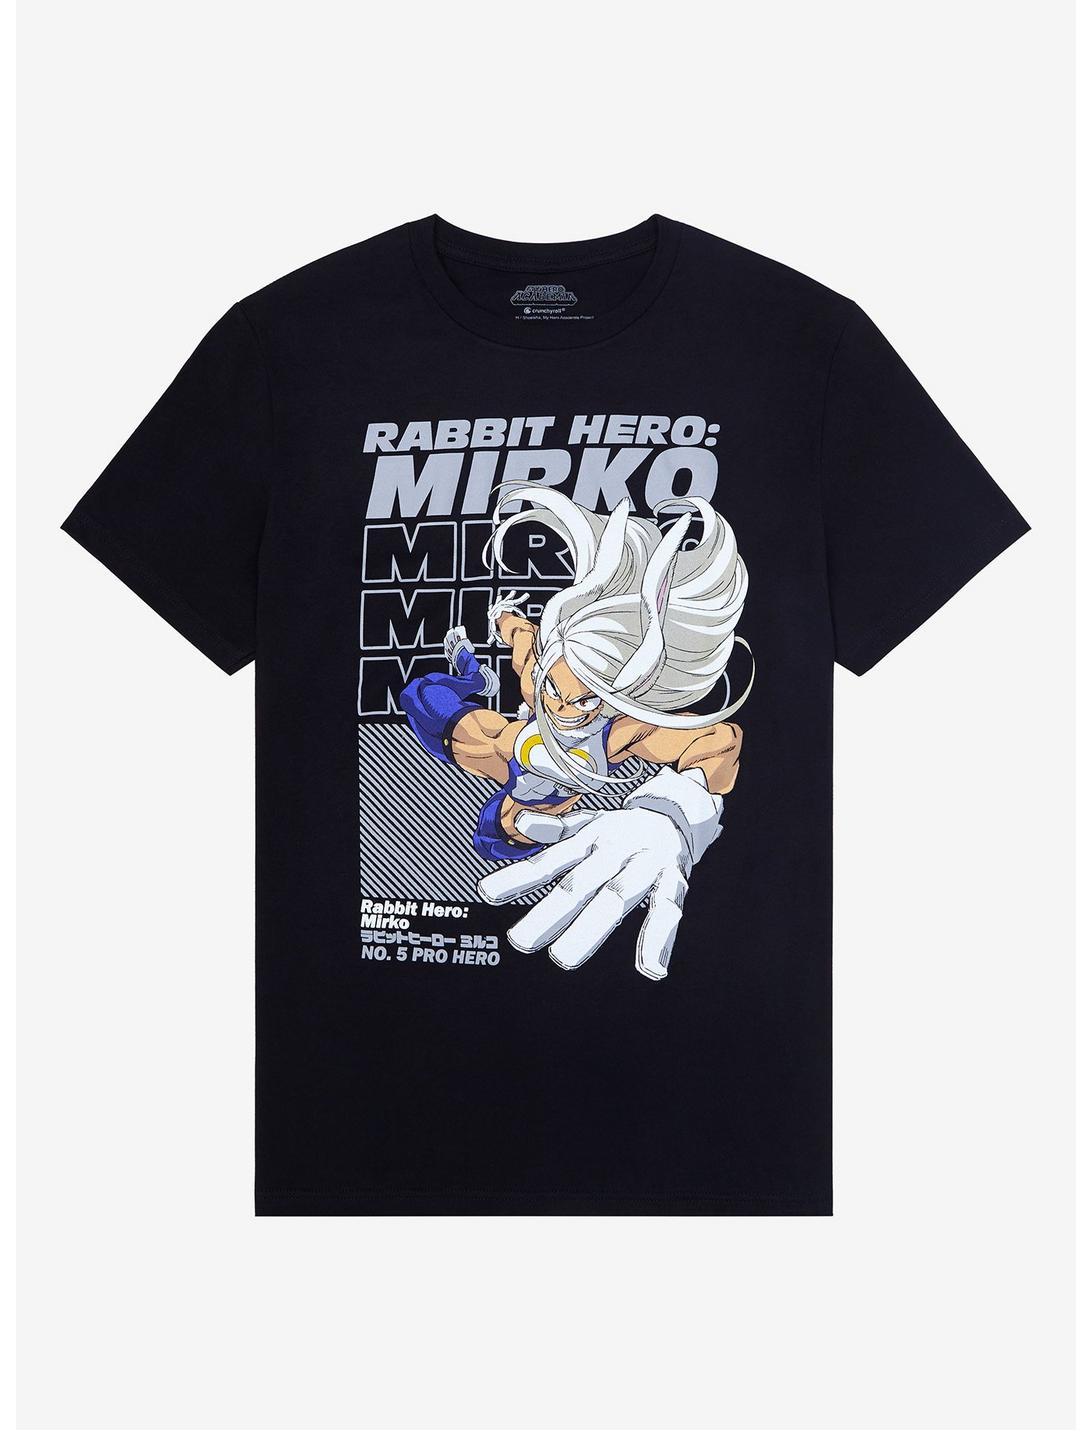 My Hero Academia Rabbit Hero: Mirko T-Shirt, BLACK, hi-res